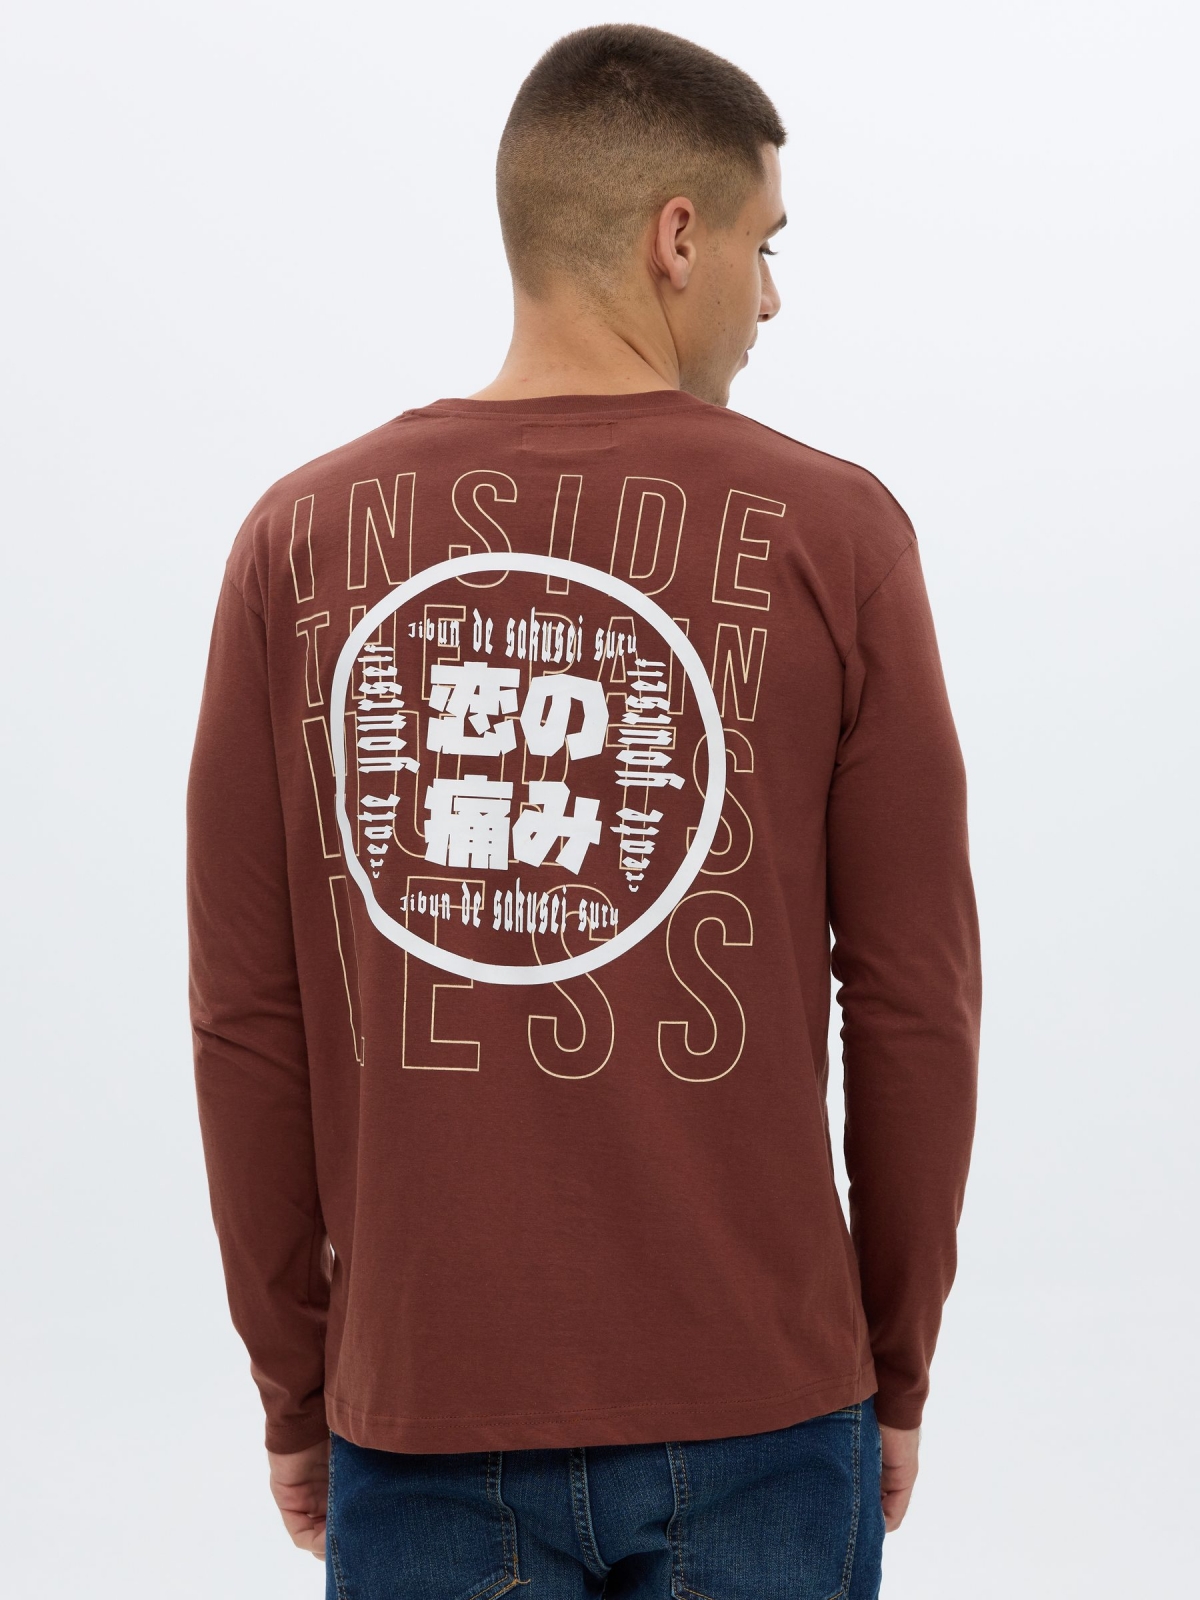 Camiseta estampado japan chocolate vista media trasera